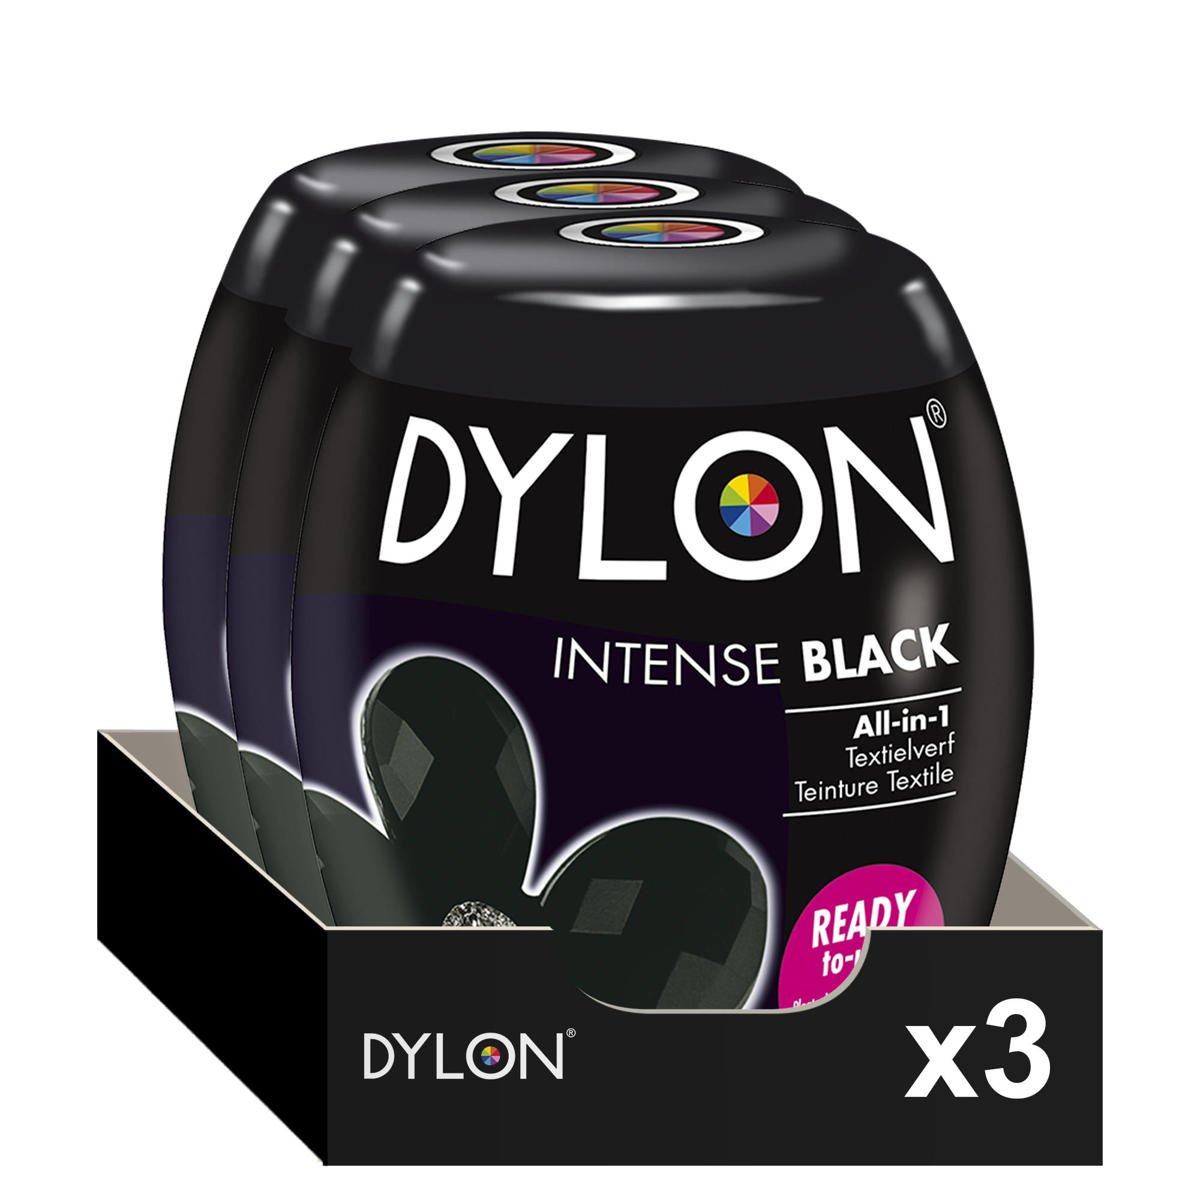 Intrekking naam Gevoel van schuld Dylon Pod - Intense Black textielverf - 350 gram | wehkamp